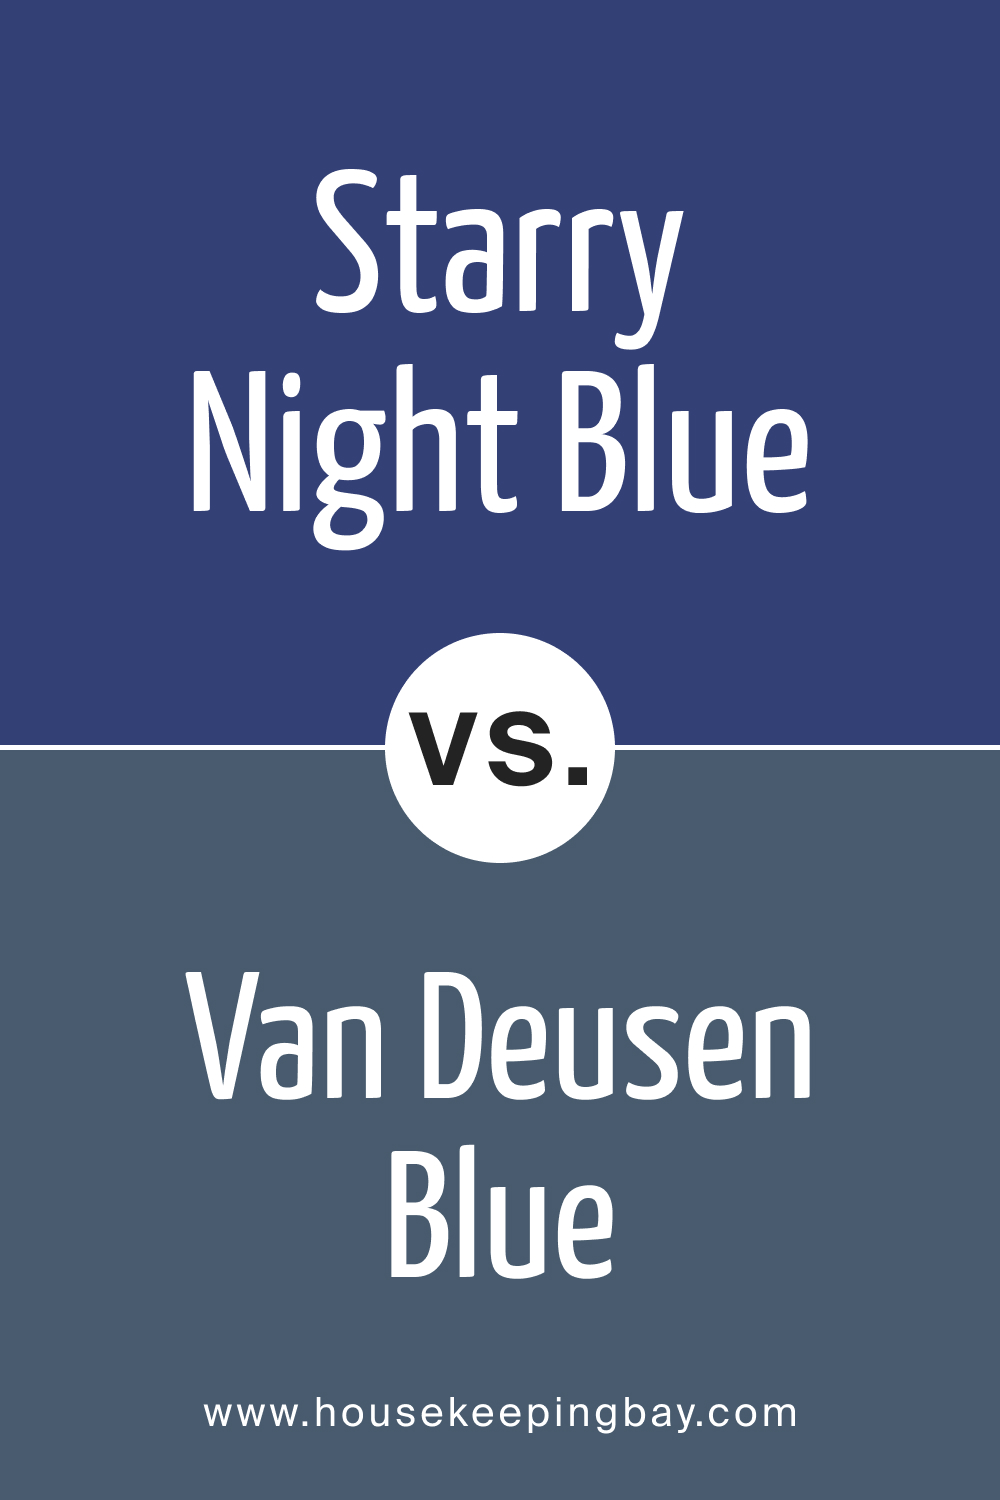 Starry Night Blue 2067 20 vs. HC 156 Van Deusen Blue